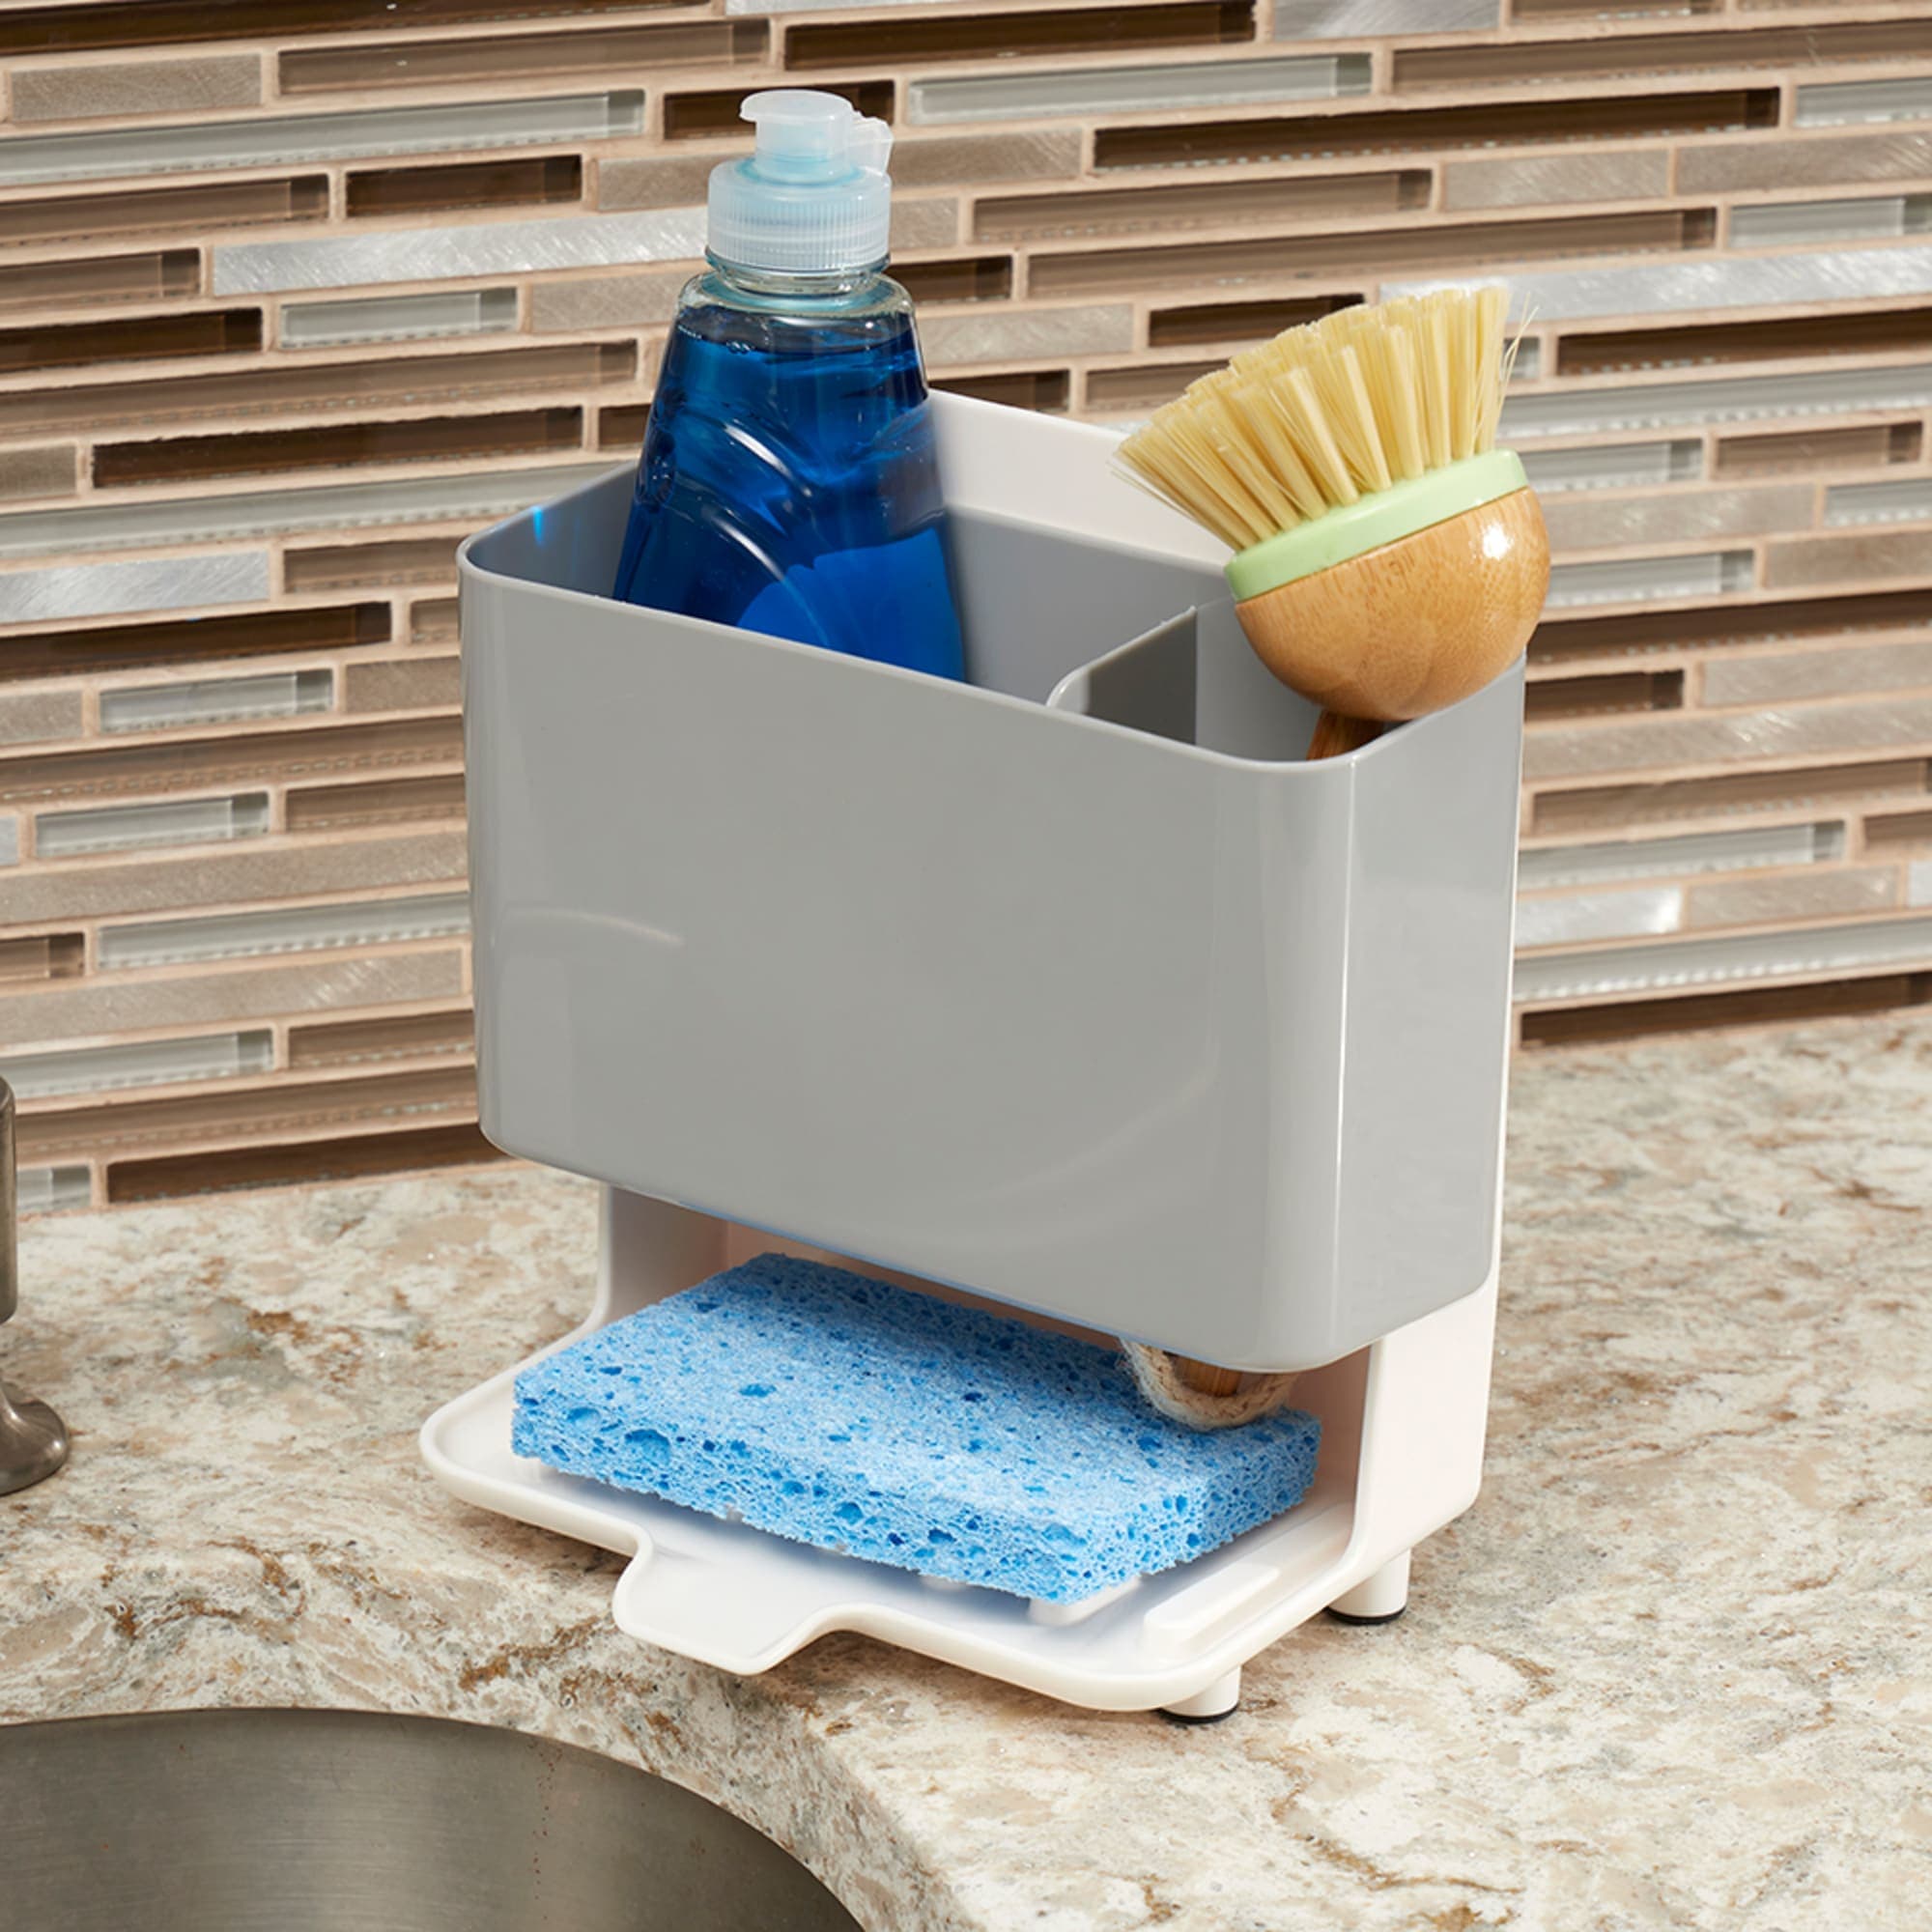 Kitchen Sink Essentials - Cleaning Supplies & Organizing Products